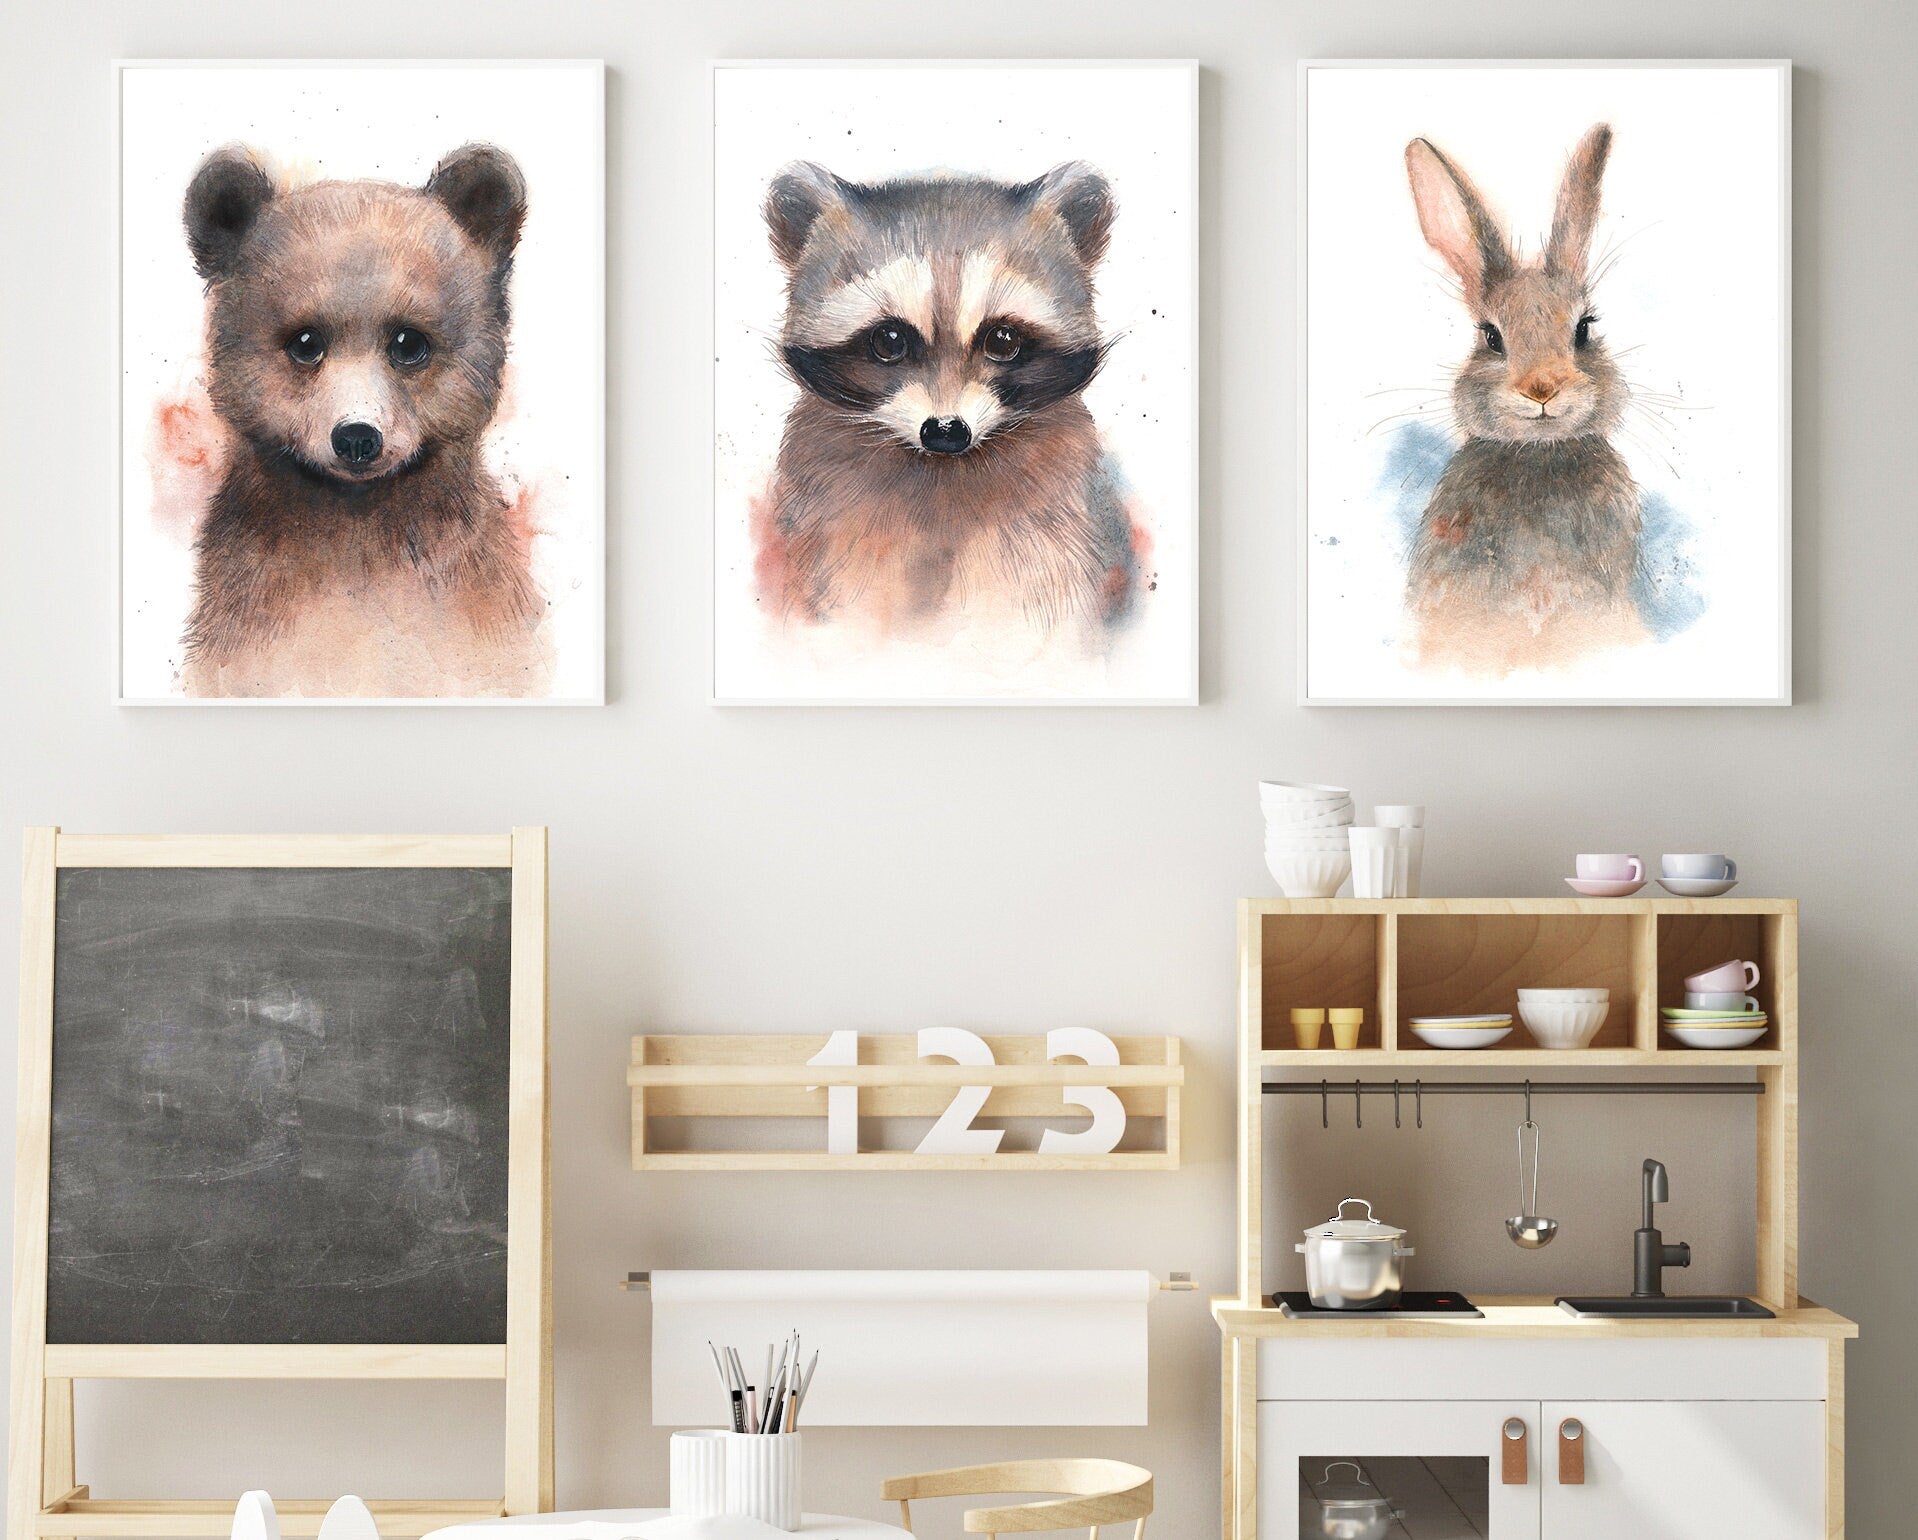 Baby Raccoon Print, Baby Animal, Nursery Animal Print, Raccoon Decor, Raccoon Wall Decor, Unframed Art Print, Baby Raccoon Nursery Print